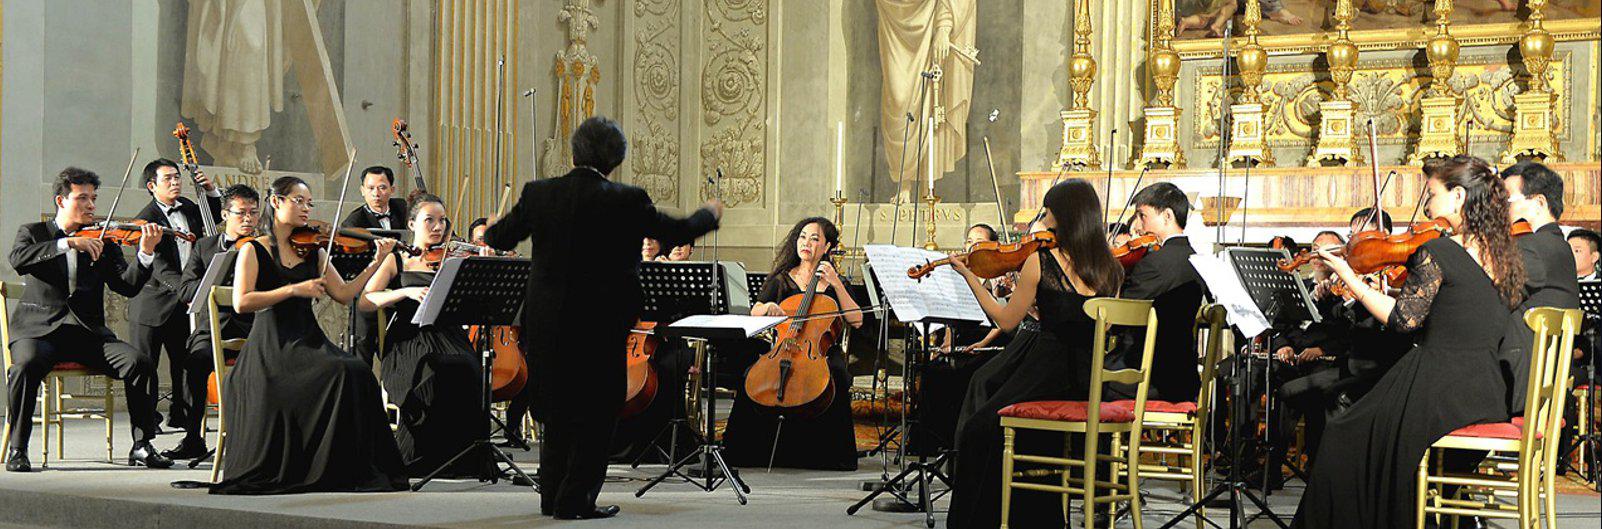 una orchestra esegue alla Cappella Paolina